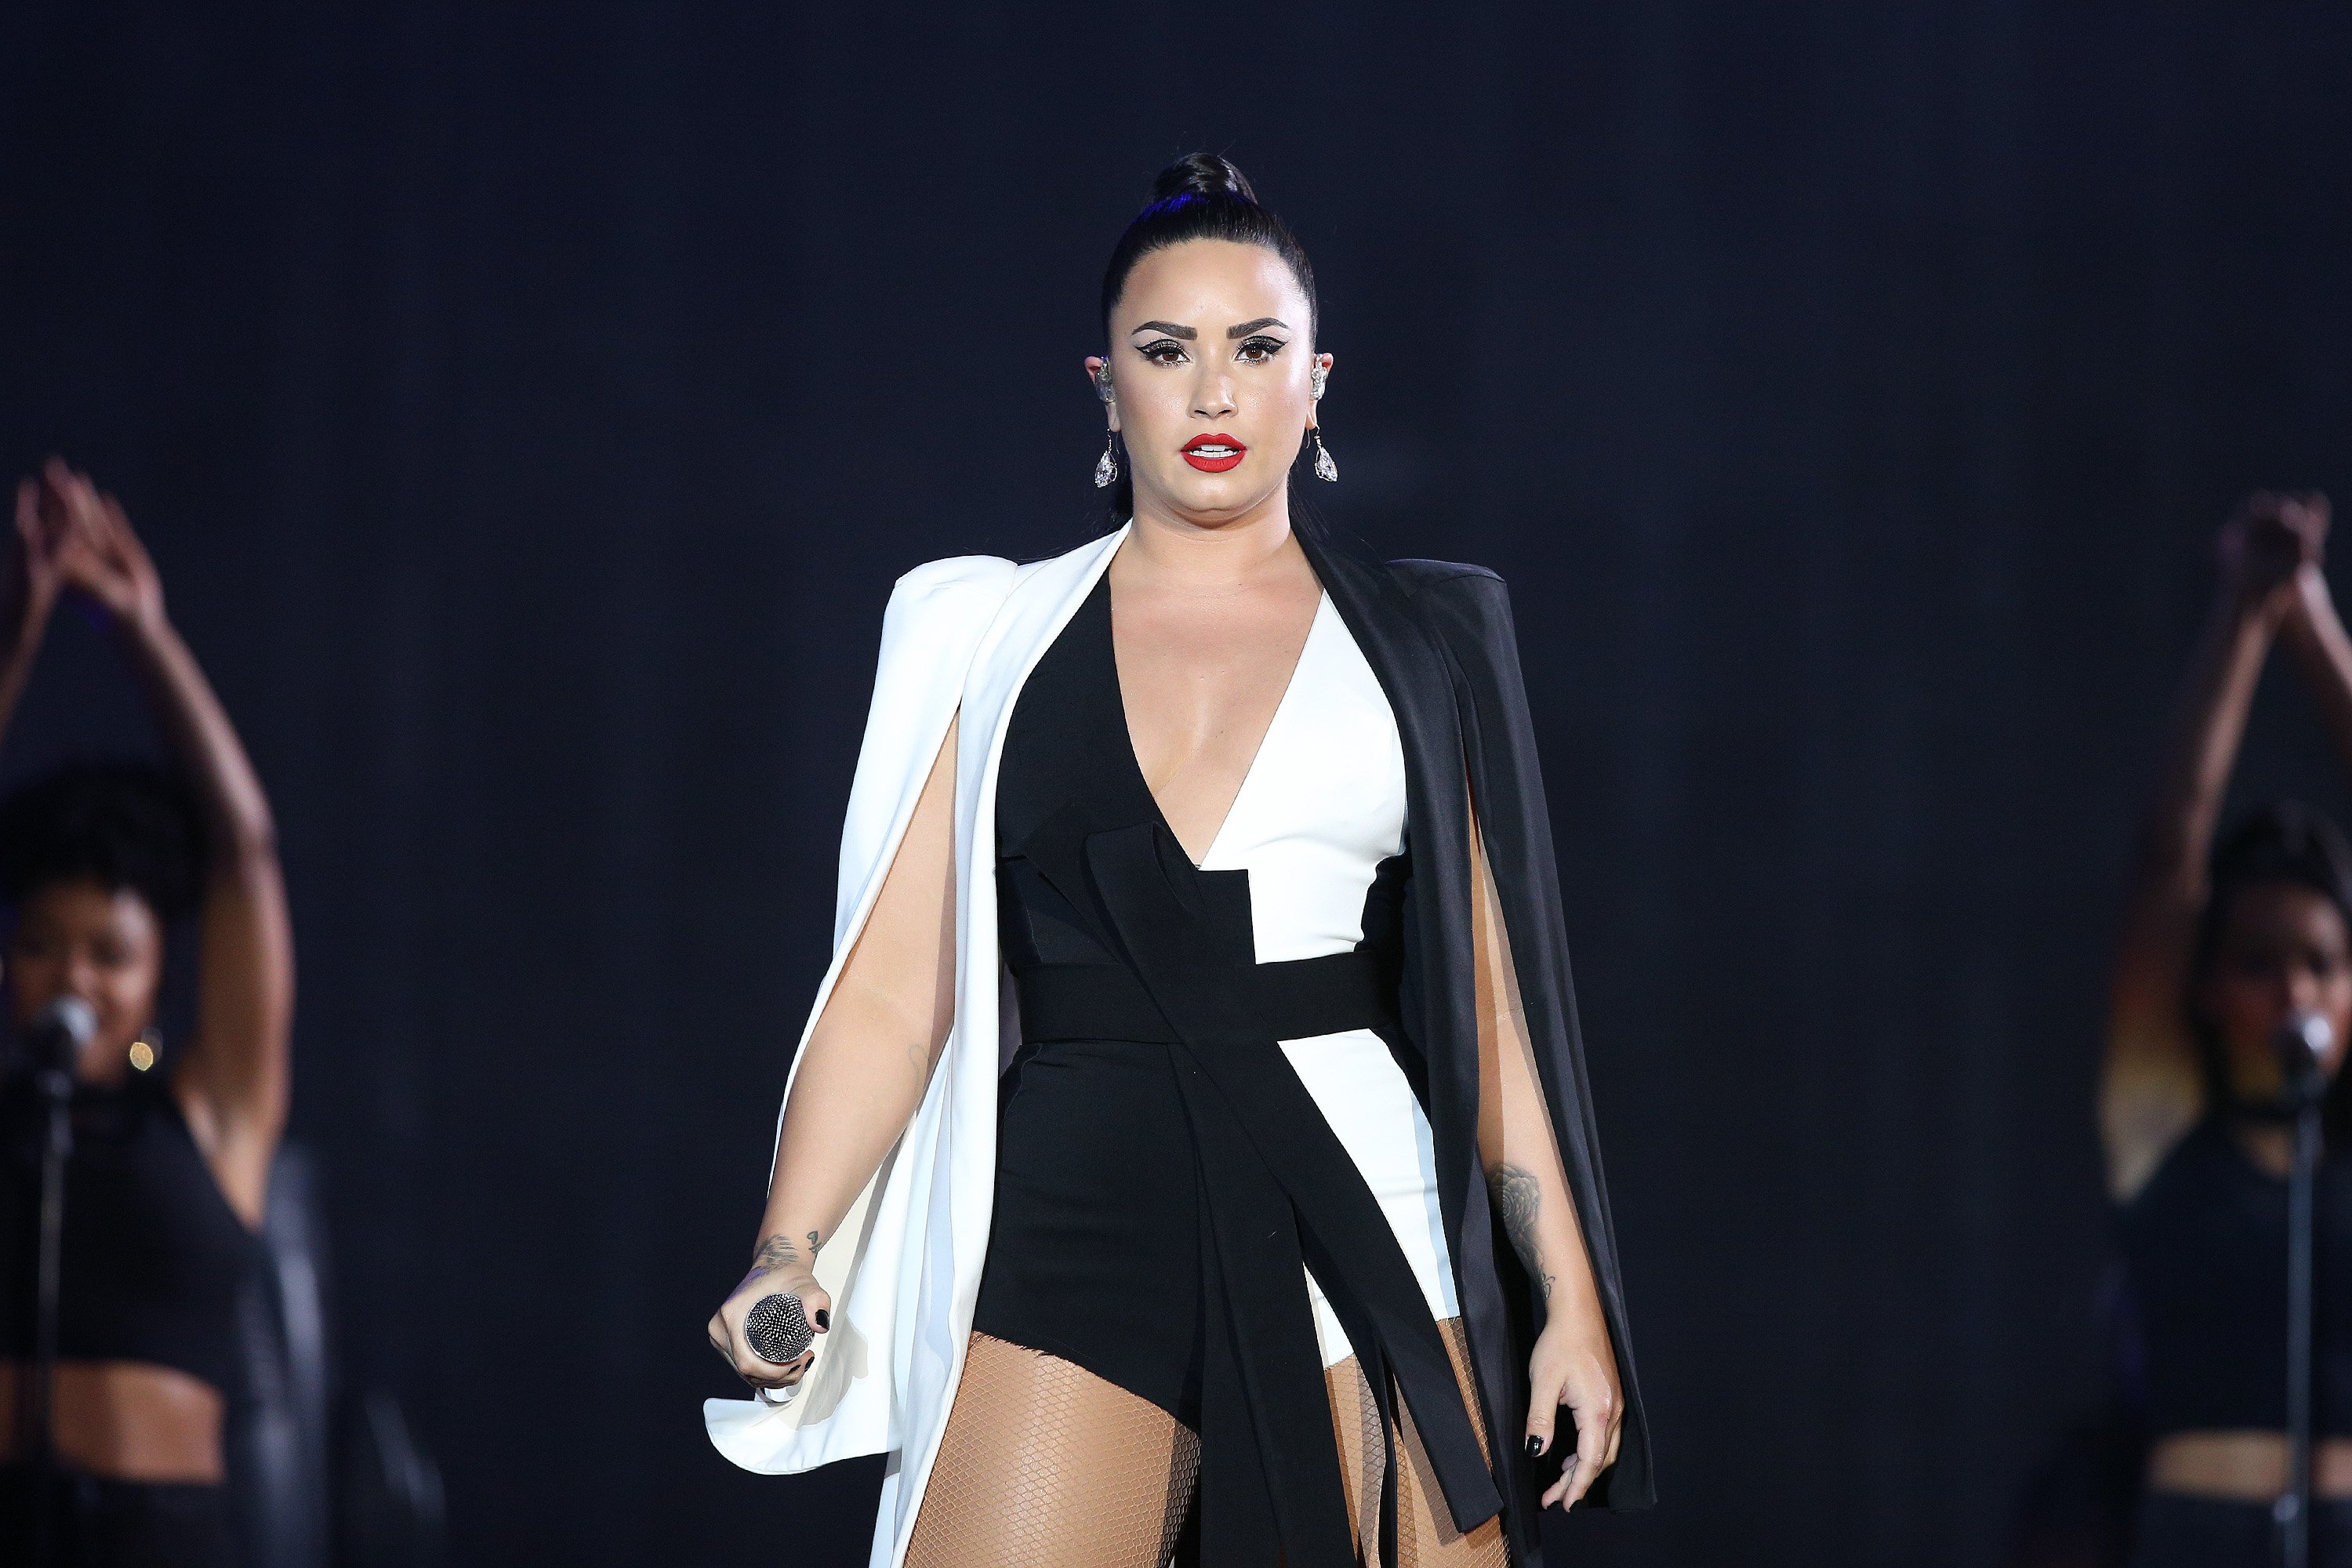 Demi Lovato performs at the Rock in Rio Lisboa 2018 music festival in Lisbon, Portugal, on June 24, 2018.